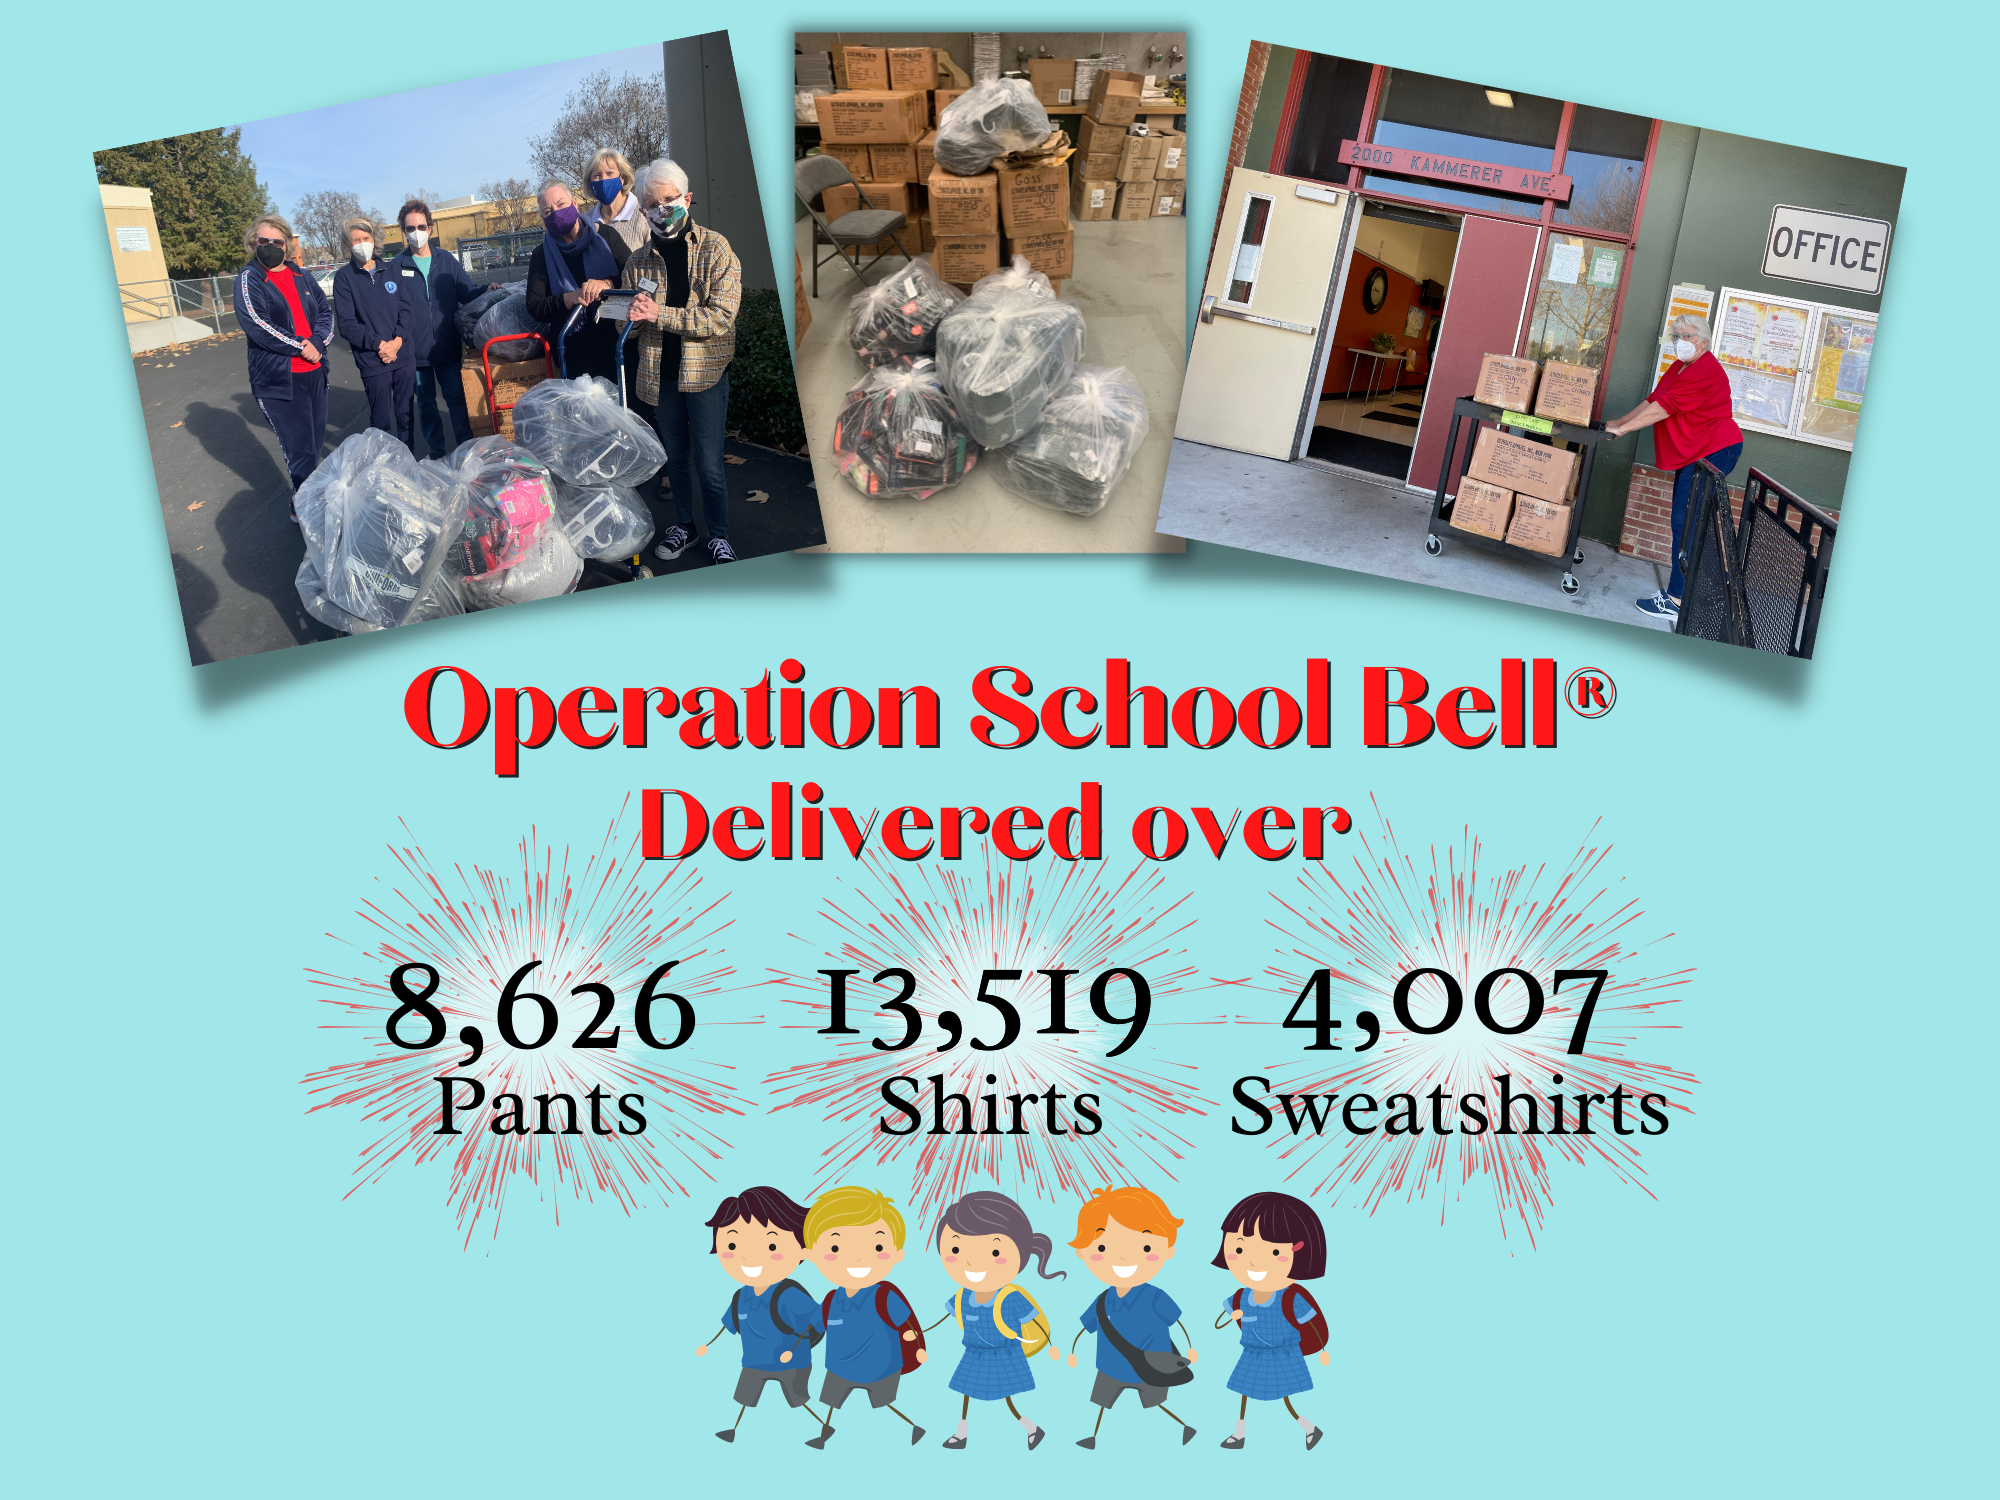 Operation School Bell Final Totals - 8,626 Pants, 13,519 Shirts, 4,007 Sweatshirts